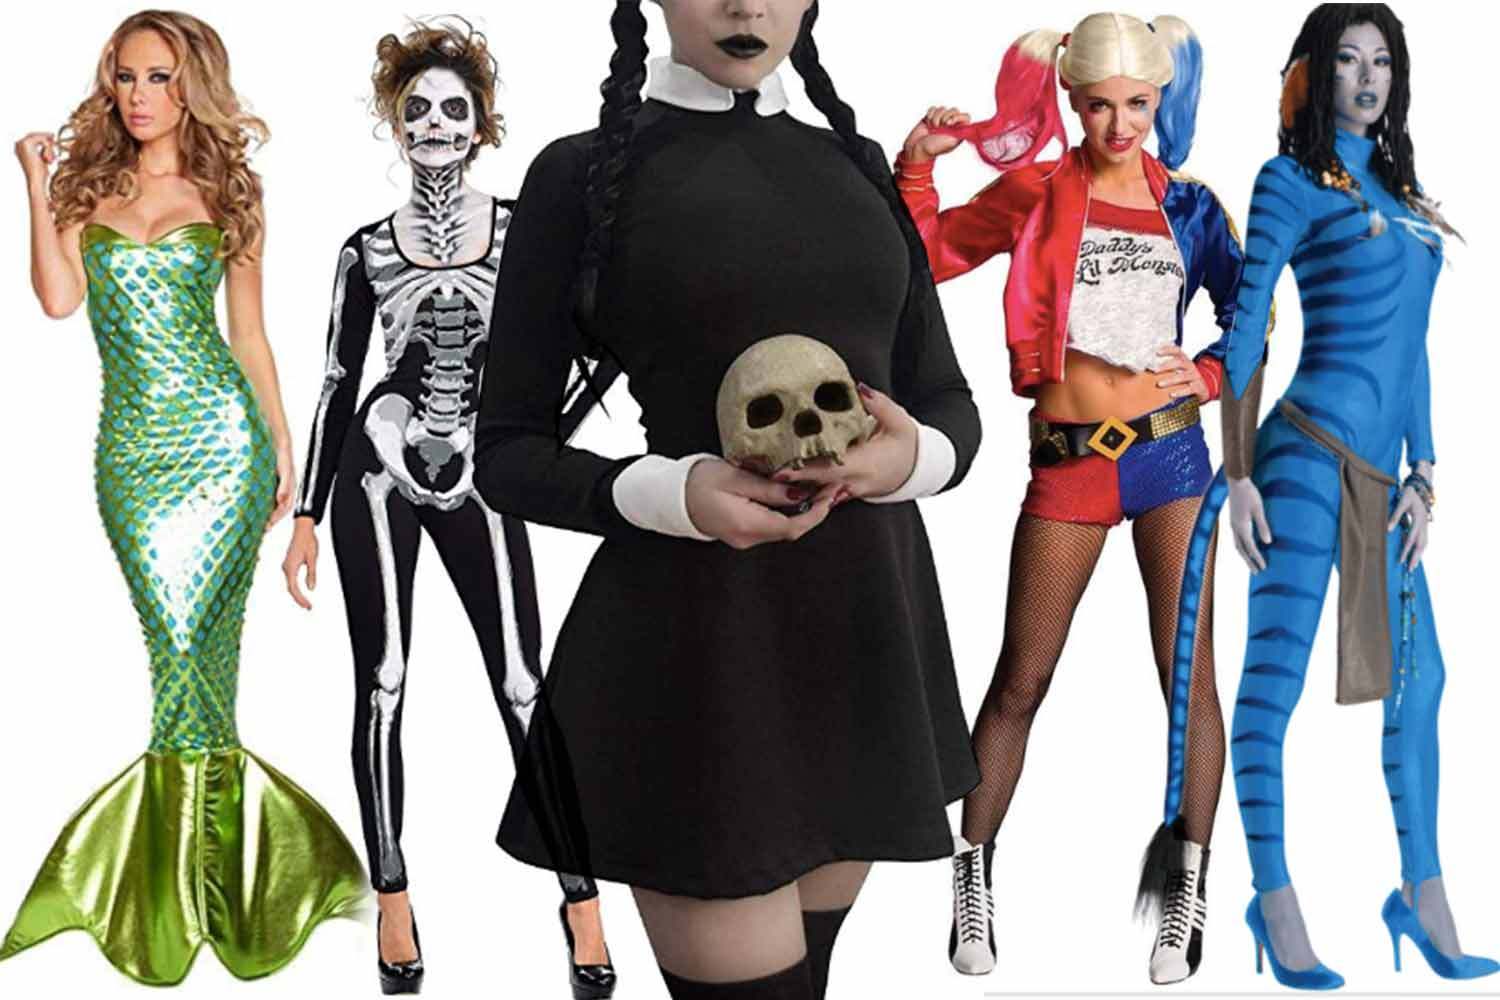 Best Halloween costumes ideas 2019 - Latest Technology News 